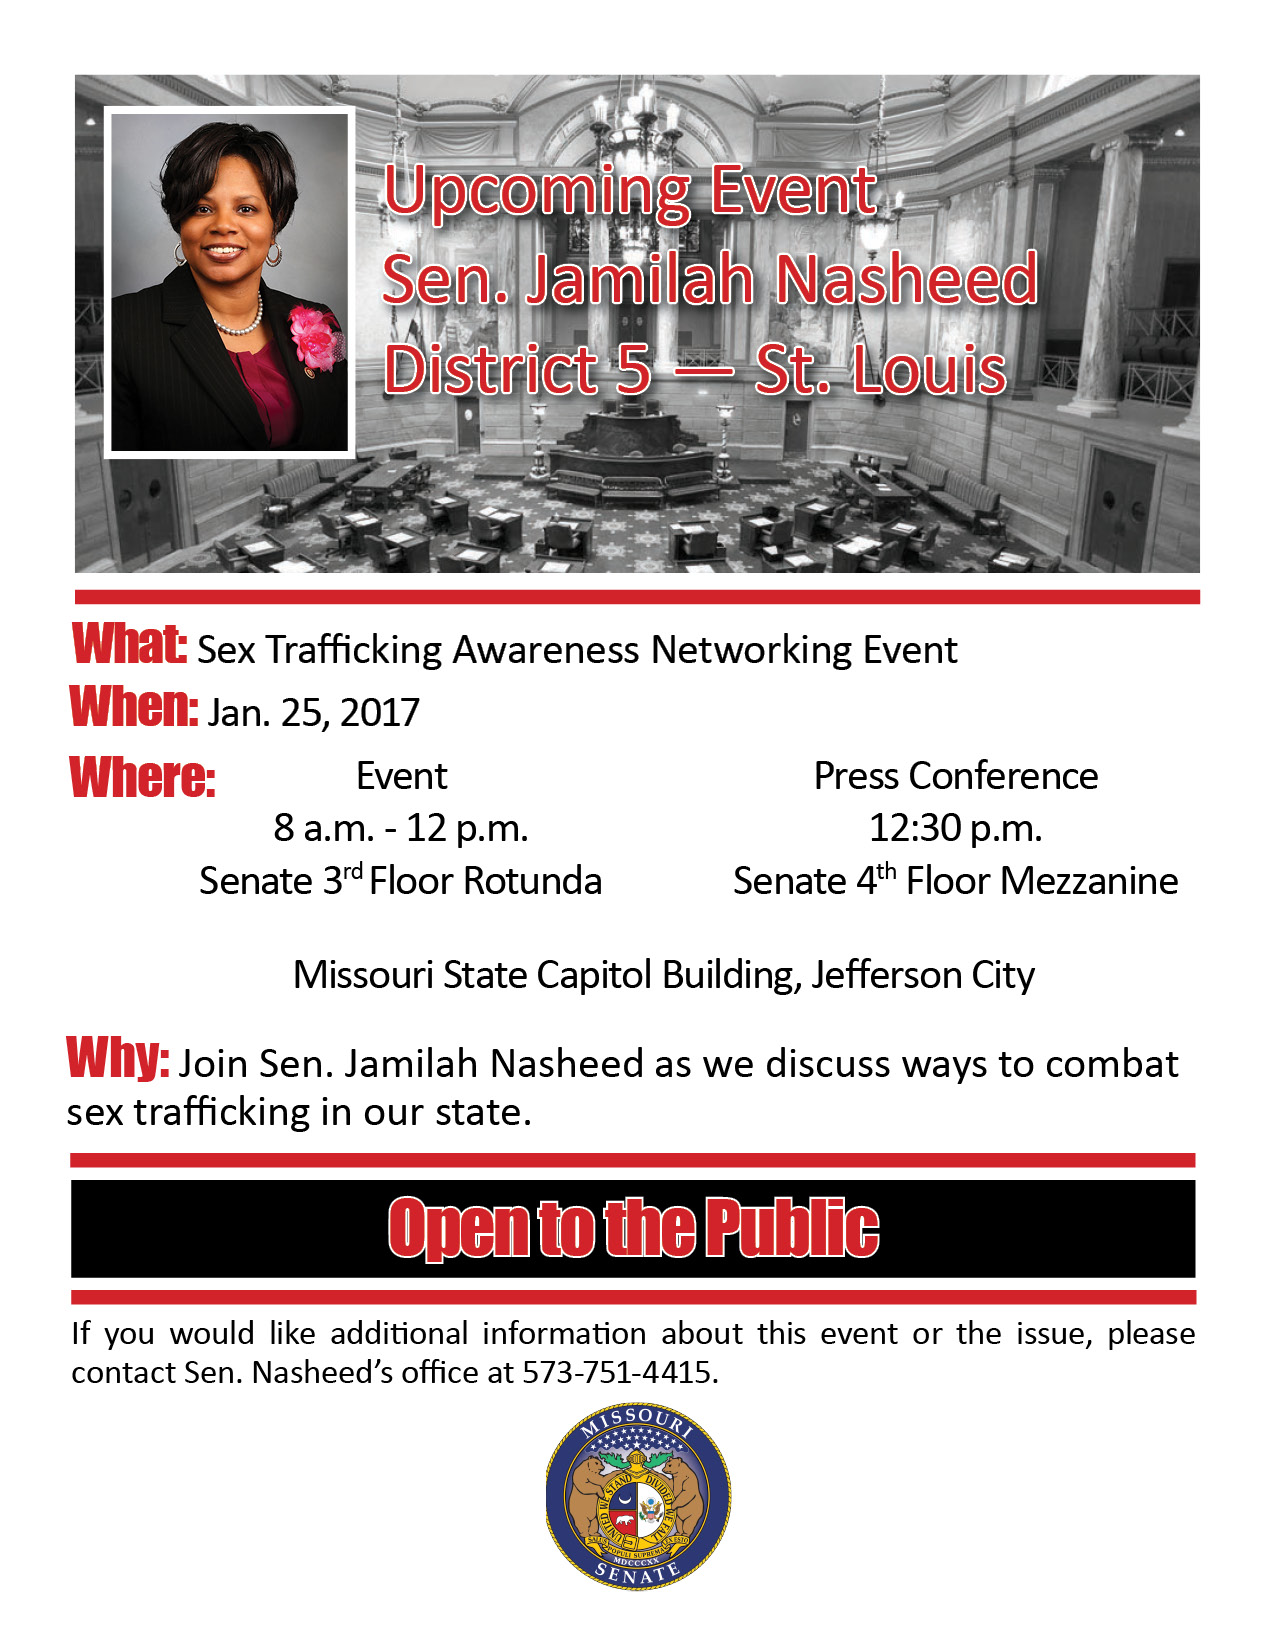 Sex Trafficking Awareness Networking Event Flyer